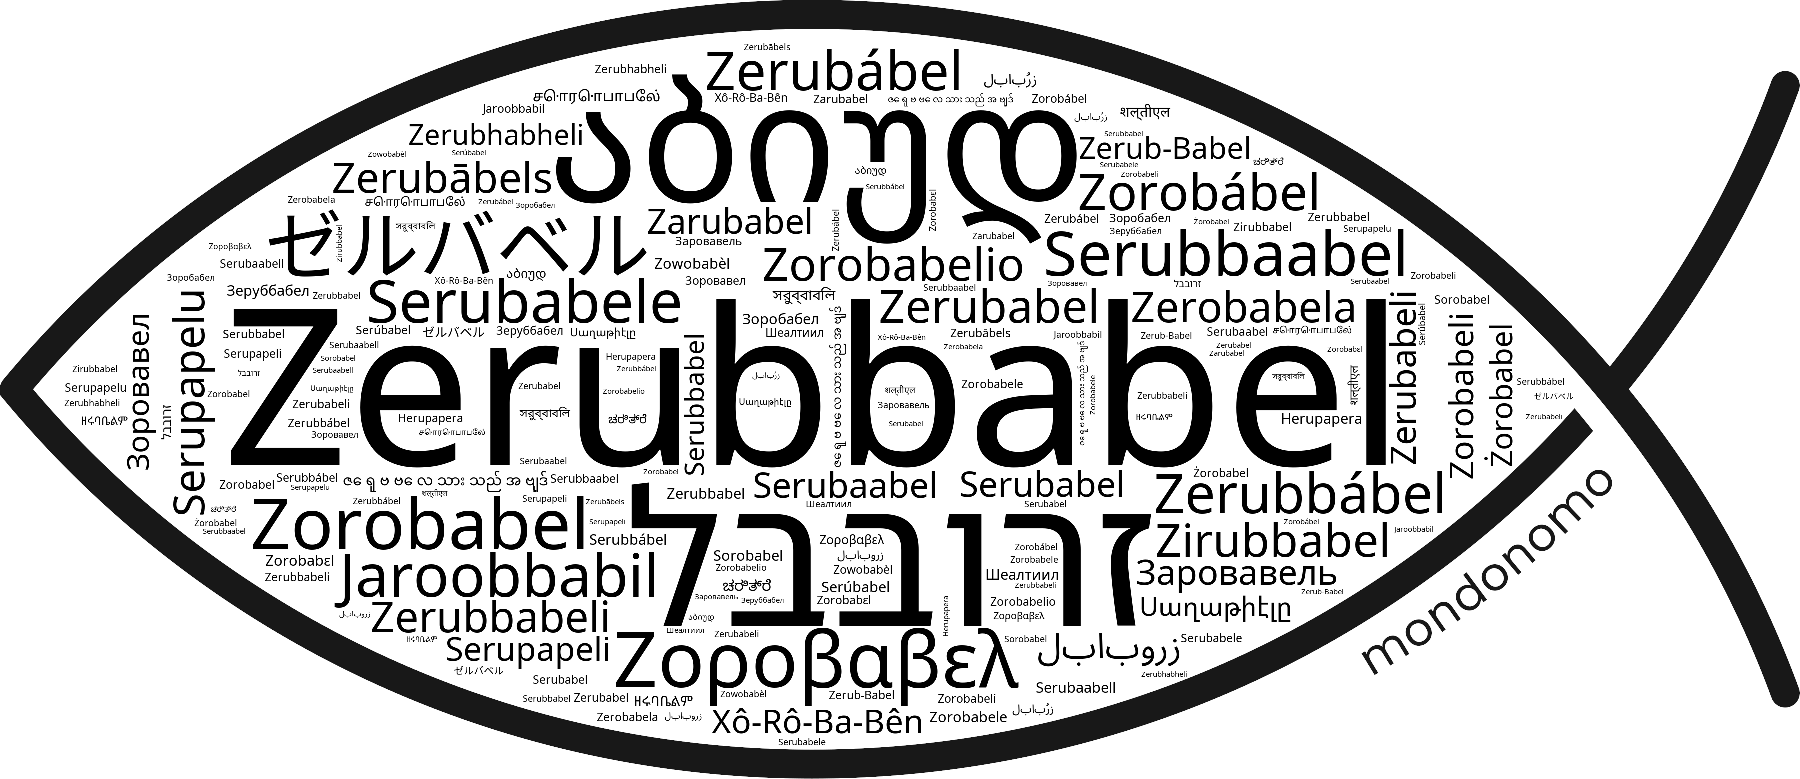 Name Zerubbabel in the world's Bibles